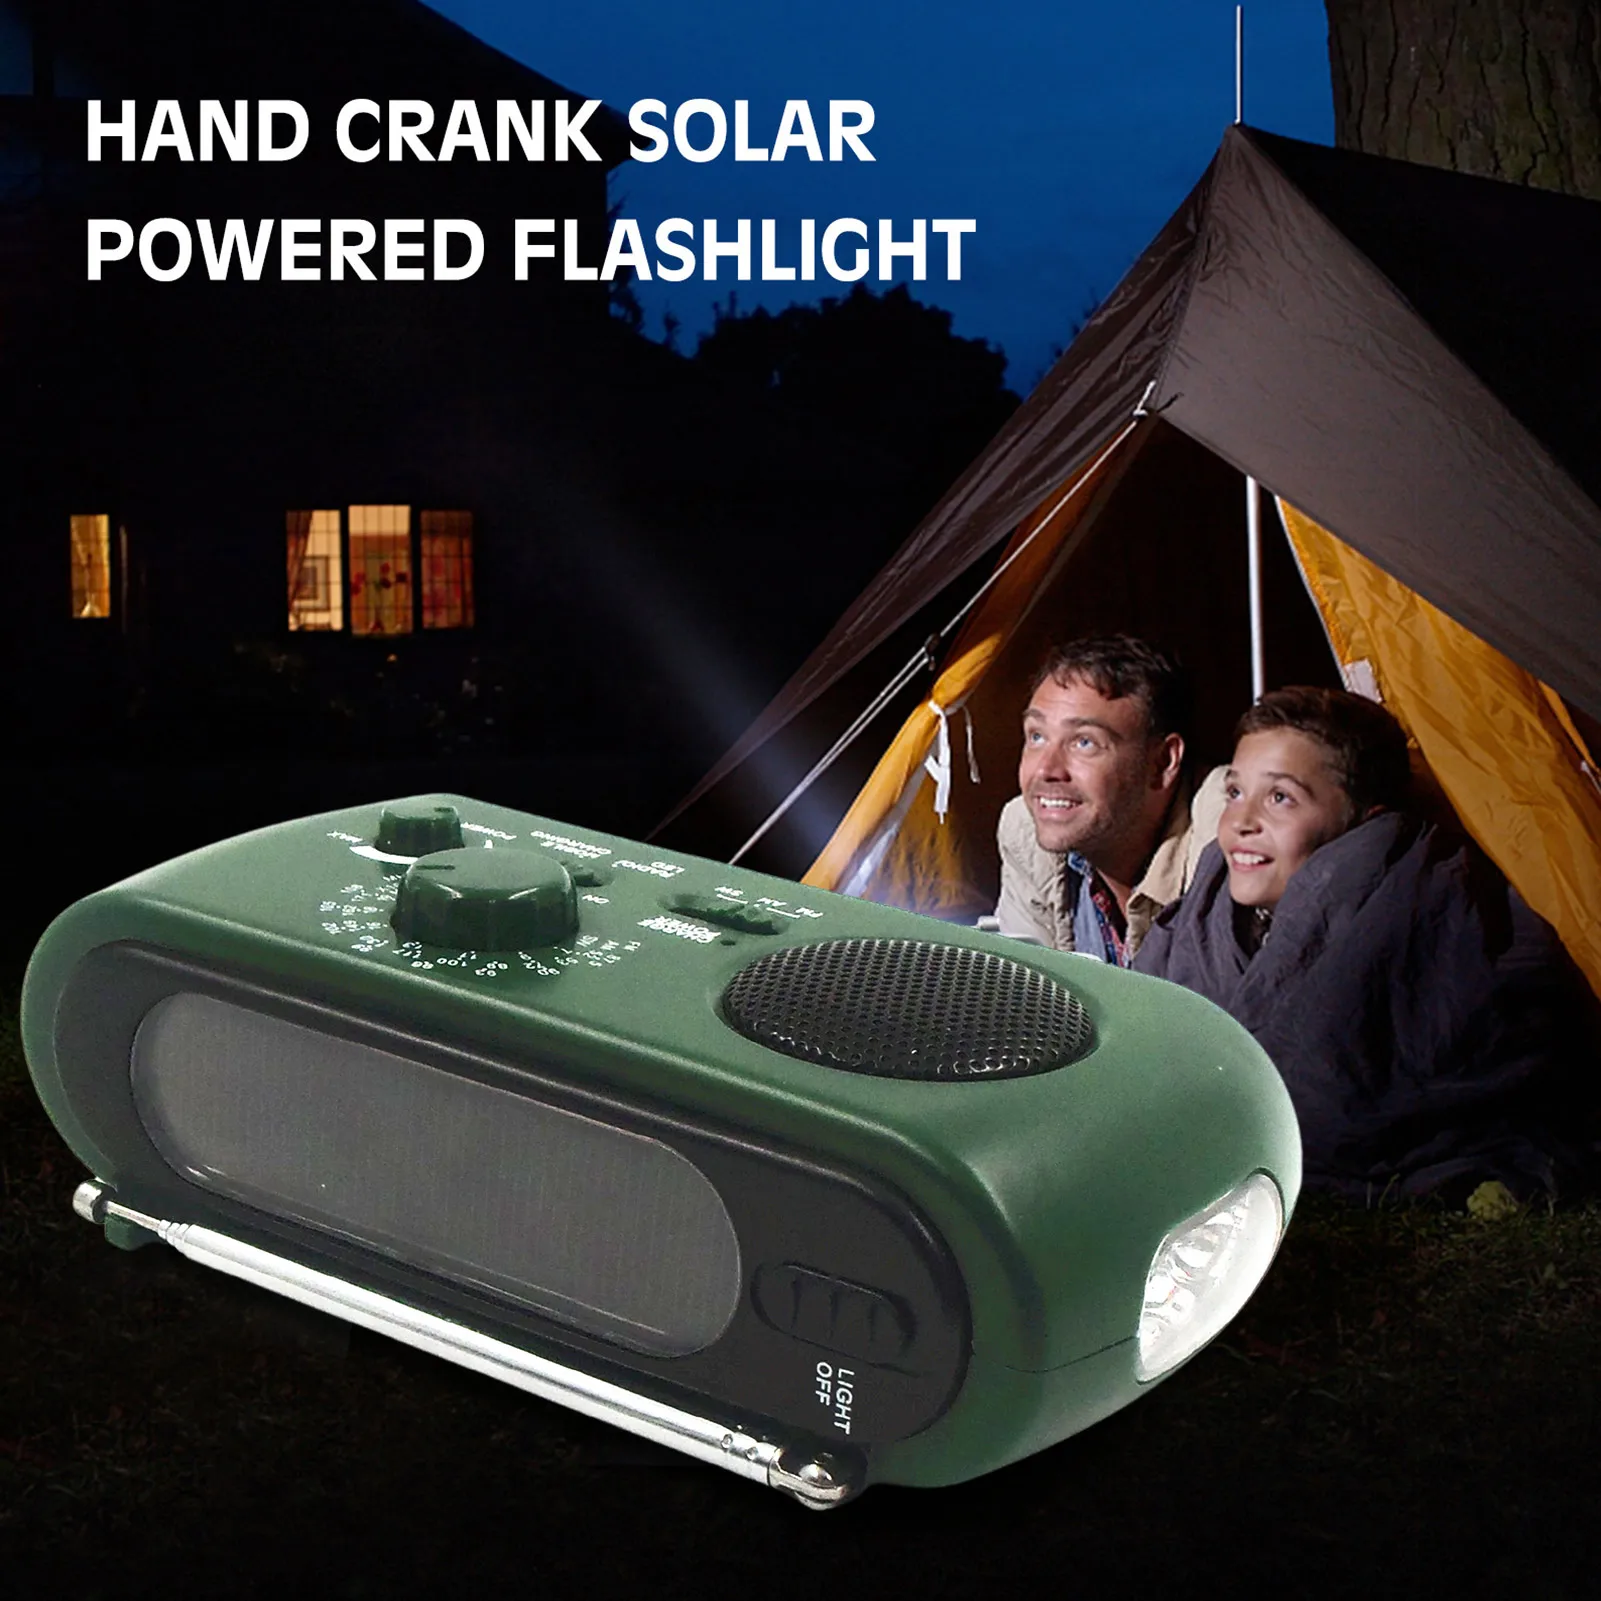 

Portable AM/FM Solar Powered Radio Emergency Hand-crank Radio With LED Flashlights Convenient To Use Outdoor Emergency Radio